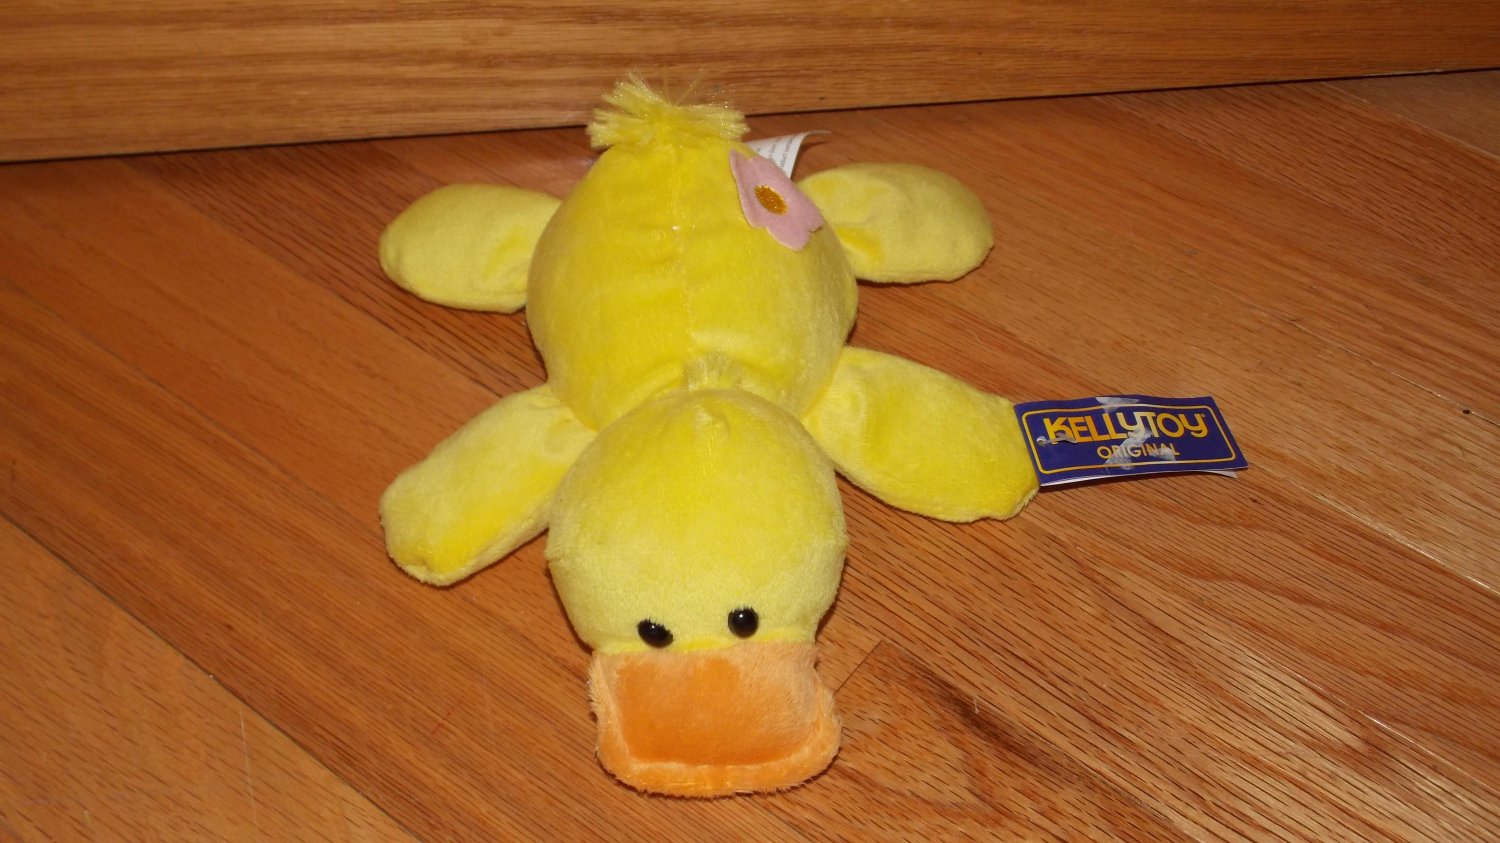 kellytoy yellow duck